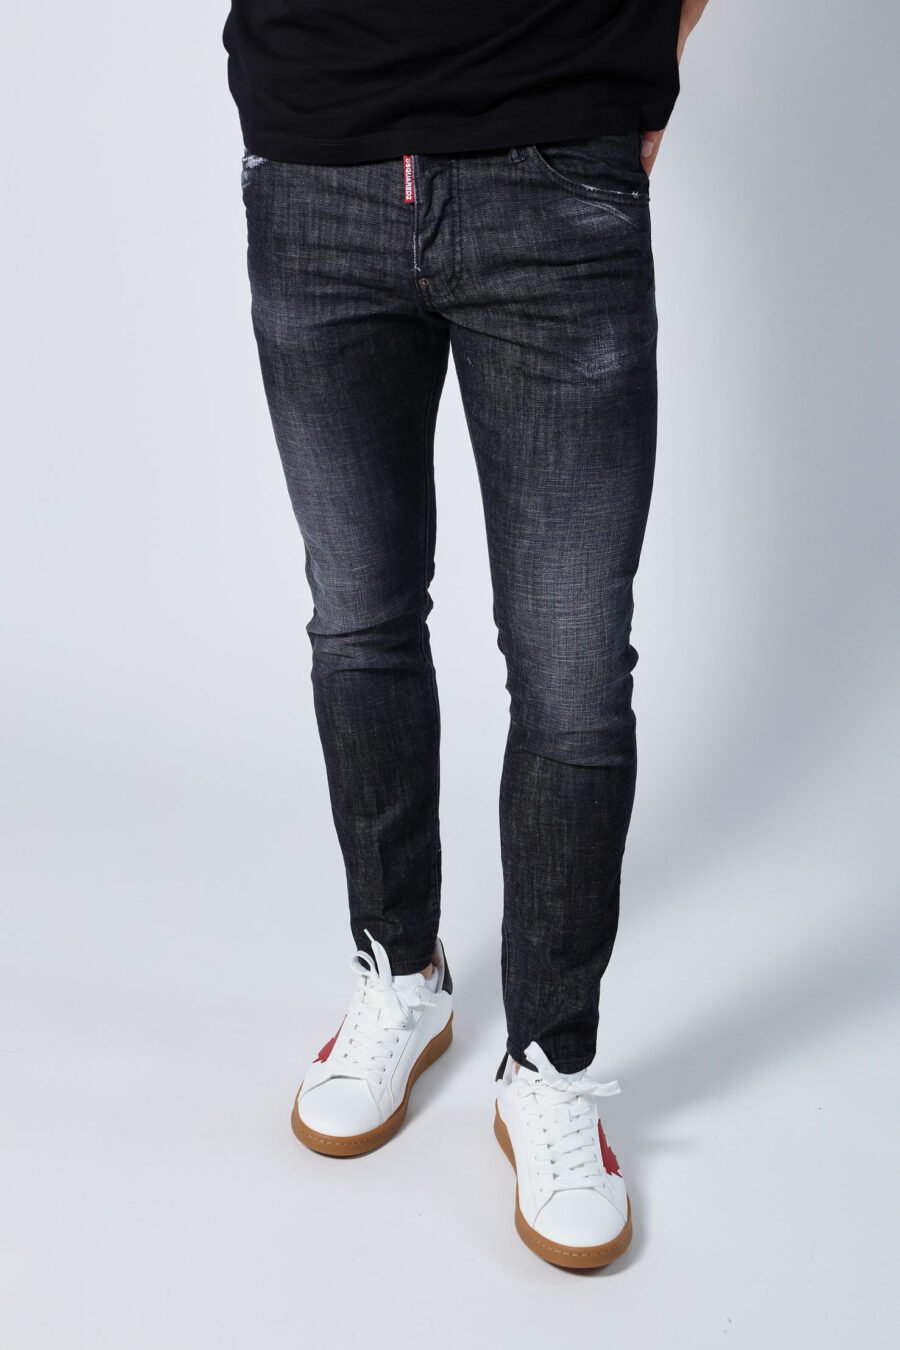 Cool guy jean trousers black semi-worn - Untitled Catalog 05679